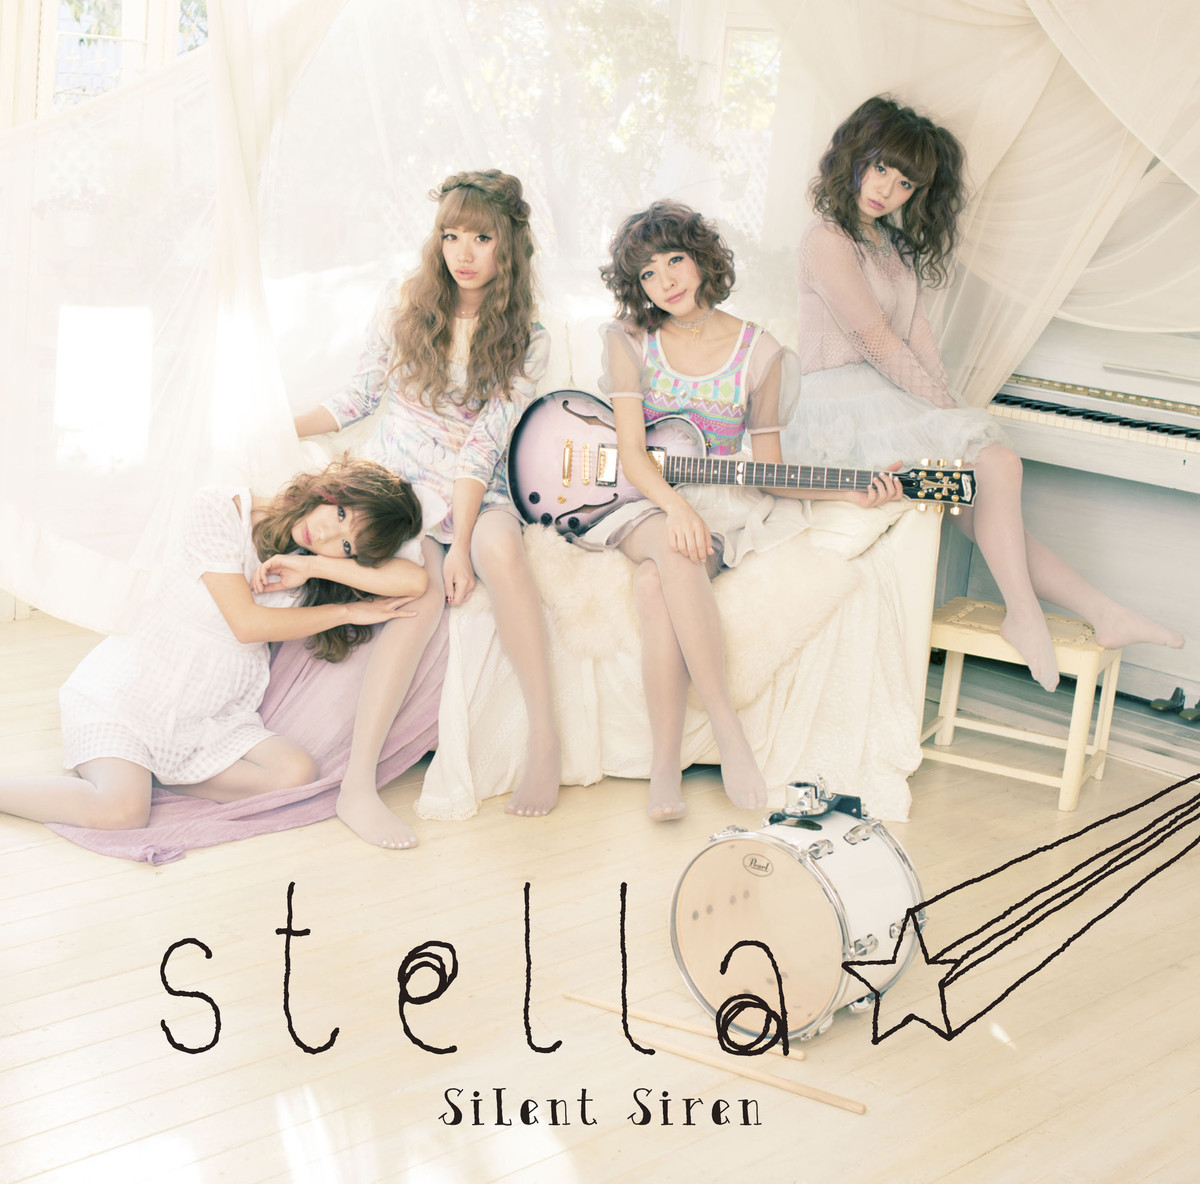 Silent Siren Stella Pv ジャケット写真撮影場所 Fumi Diary 2号店